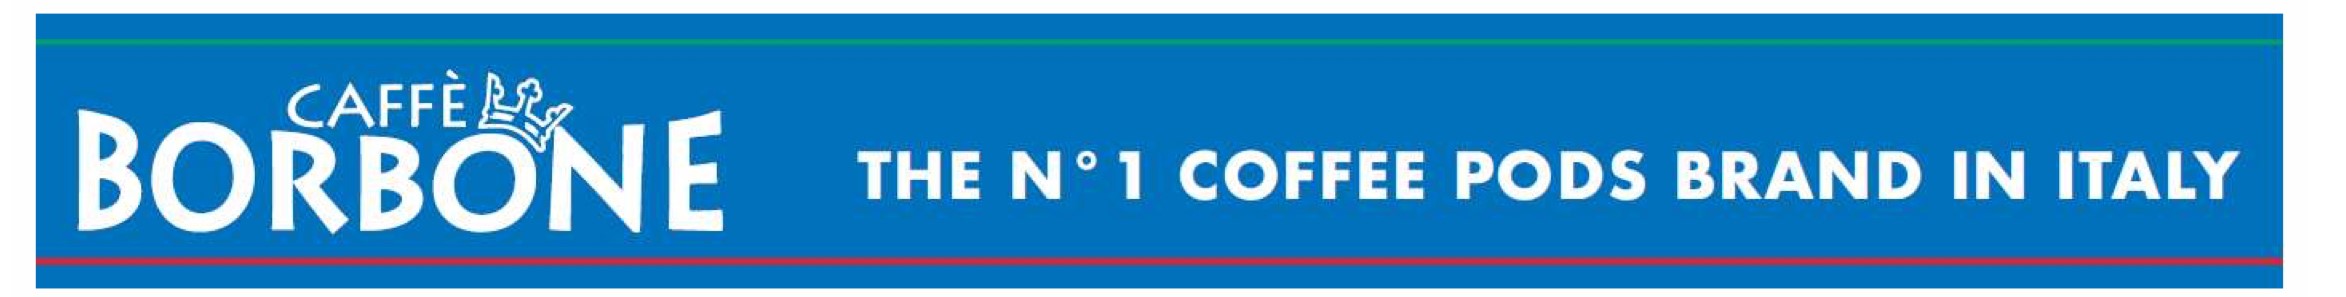 CAFFE BORBONE 100% ARABICA Blend - Aluminum Nespresso®* Machine Compatible Capsules - 10PK - ALUMINUM PODS